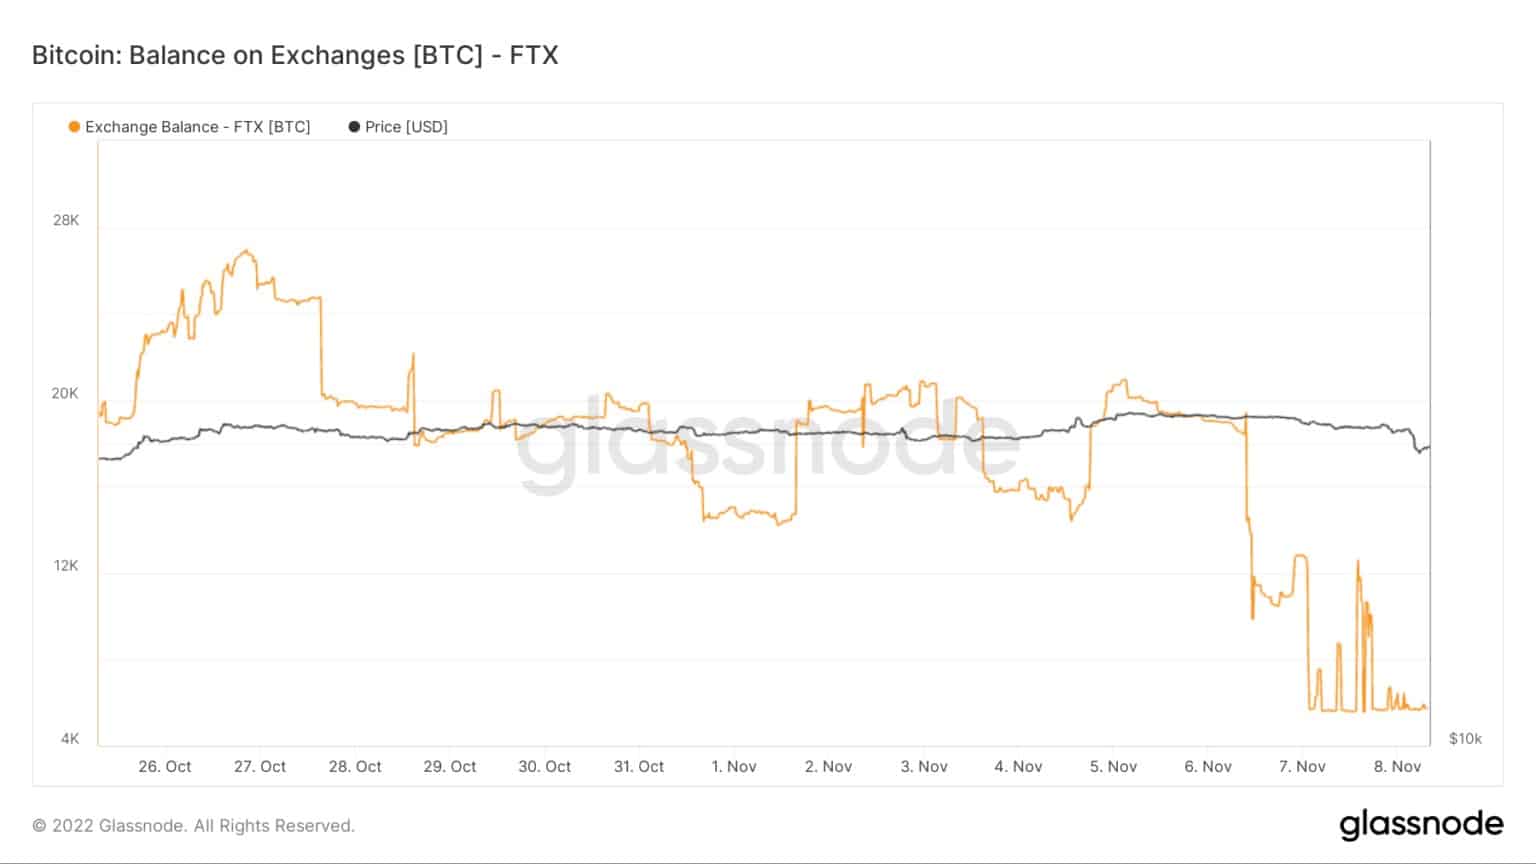 FTX Bitcoin balans van oktober tot november 2022